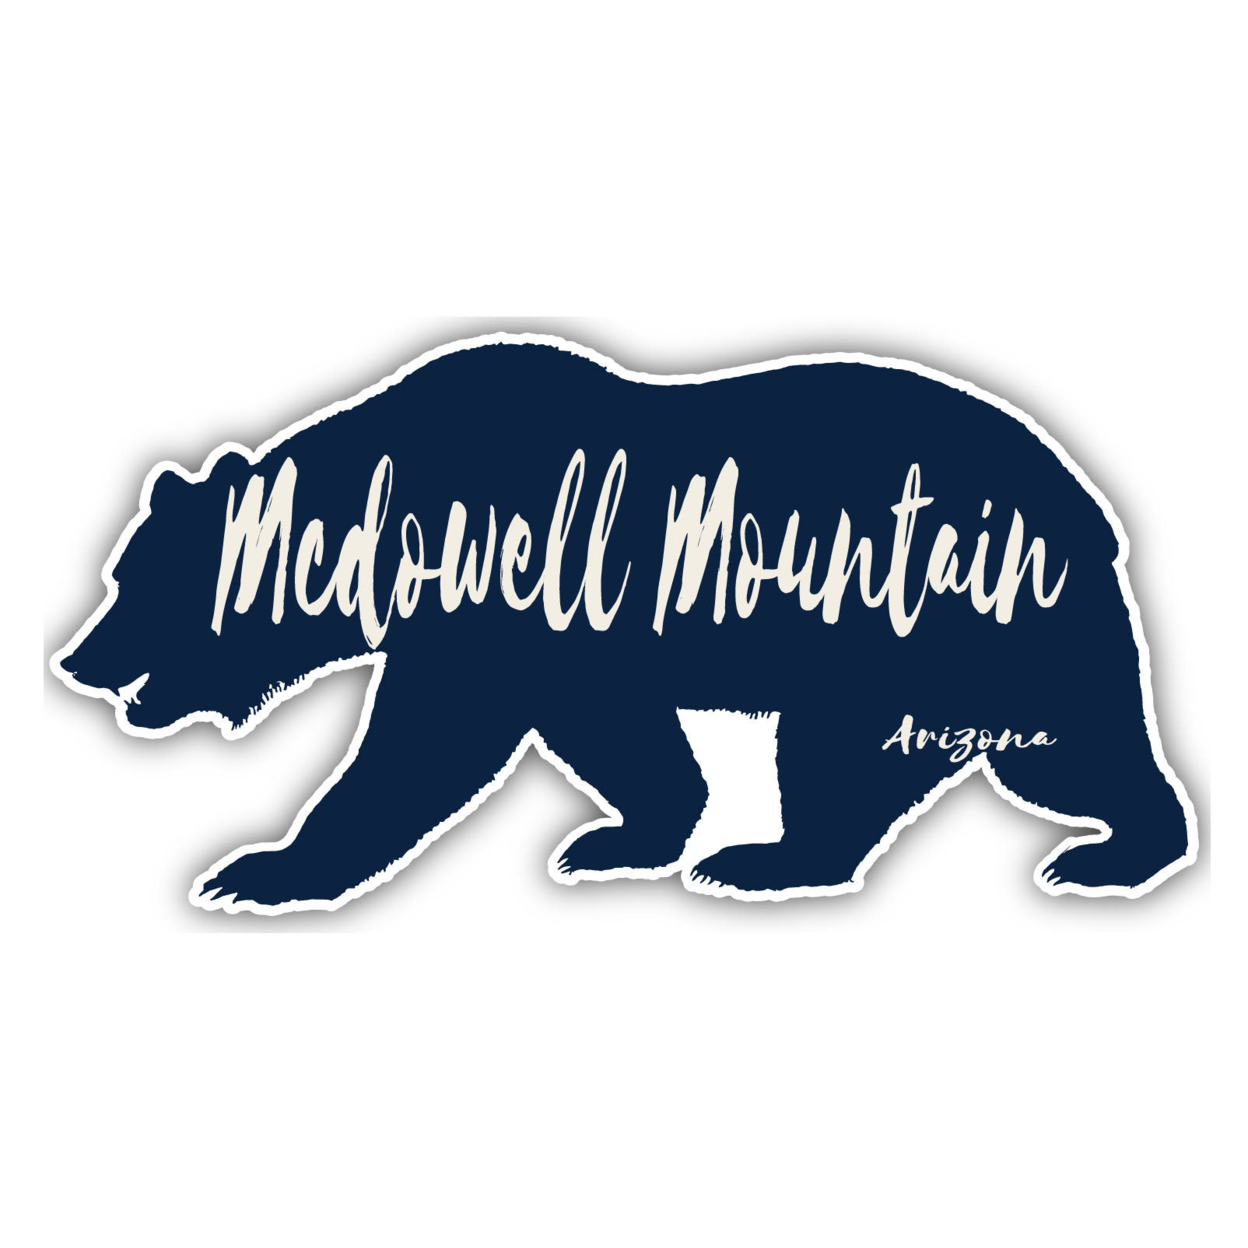 Mcdowell Mountain Arizona Souvenir Decorative Stickers (Choose Theme And Size) - 2-Inch, Bear